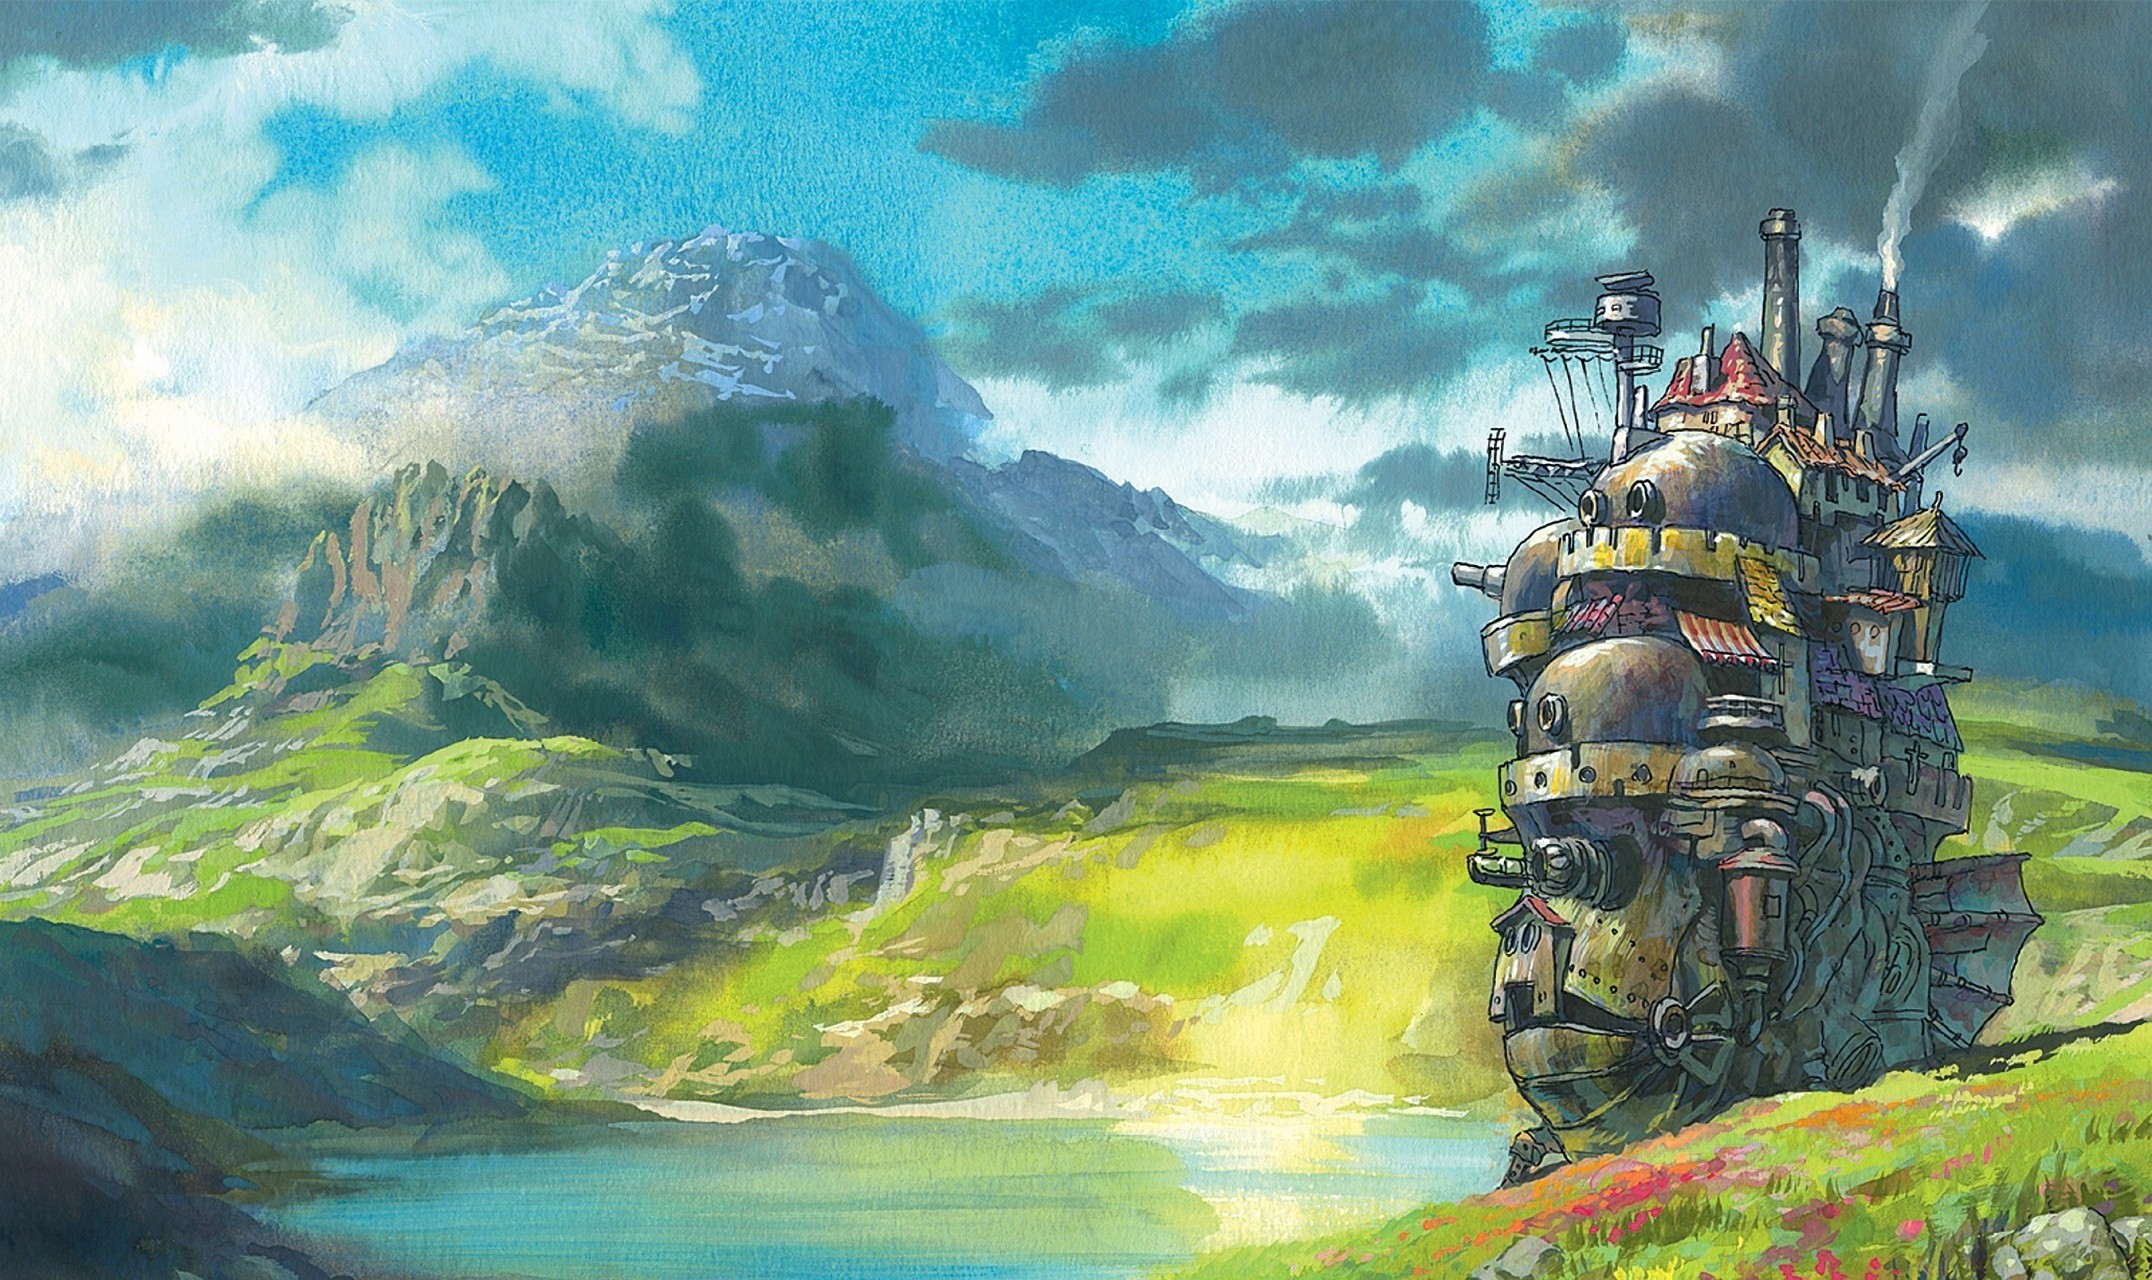 digital Art, Fantasy Art, Nature, Lake, Rock, Hill, Mountain, Clouds, Mist, Metal, Chimneys, Smoke, Construction, Building, Drawing, Howls Moving Castle, Studio Ghibli, Movies, Hayao Miyazaki Wallpaper